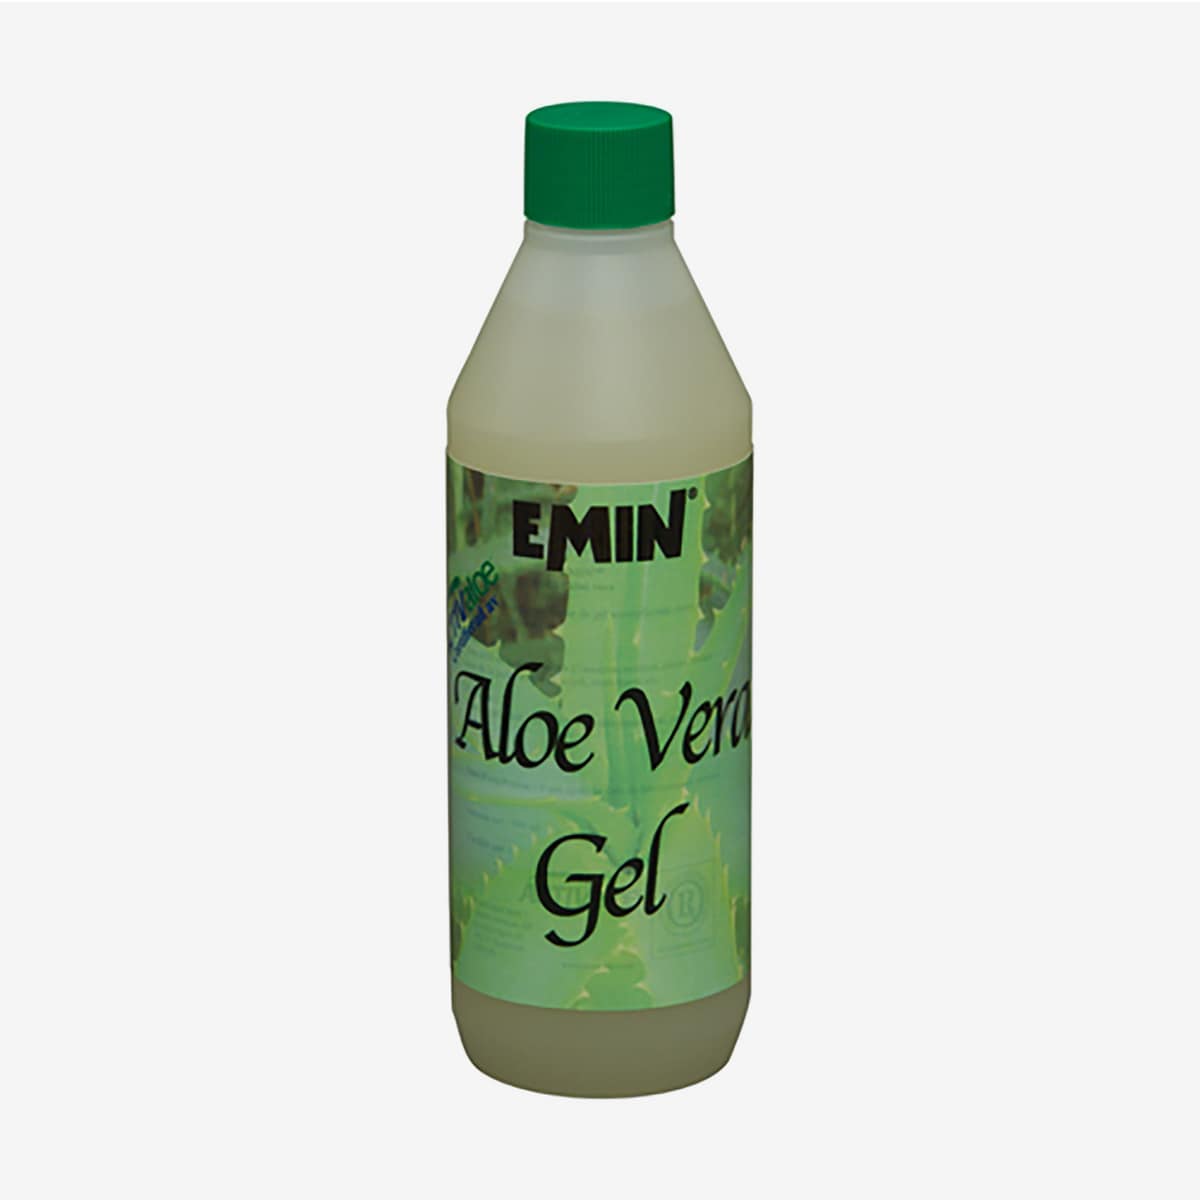 Emin Aloe Vera gelé, 500 ml.